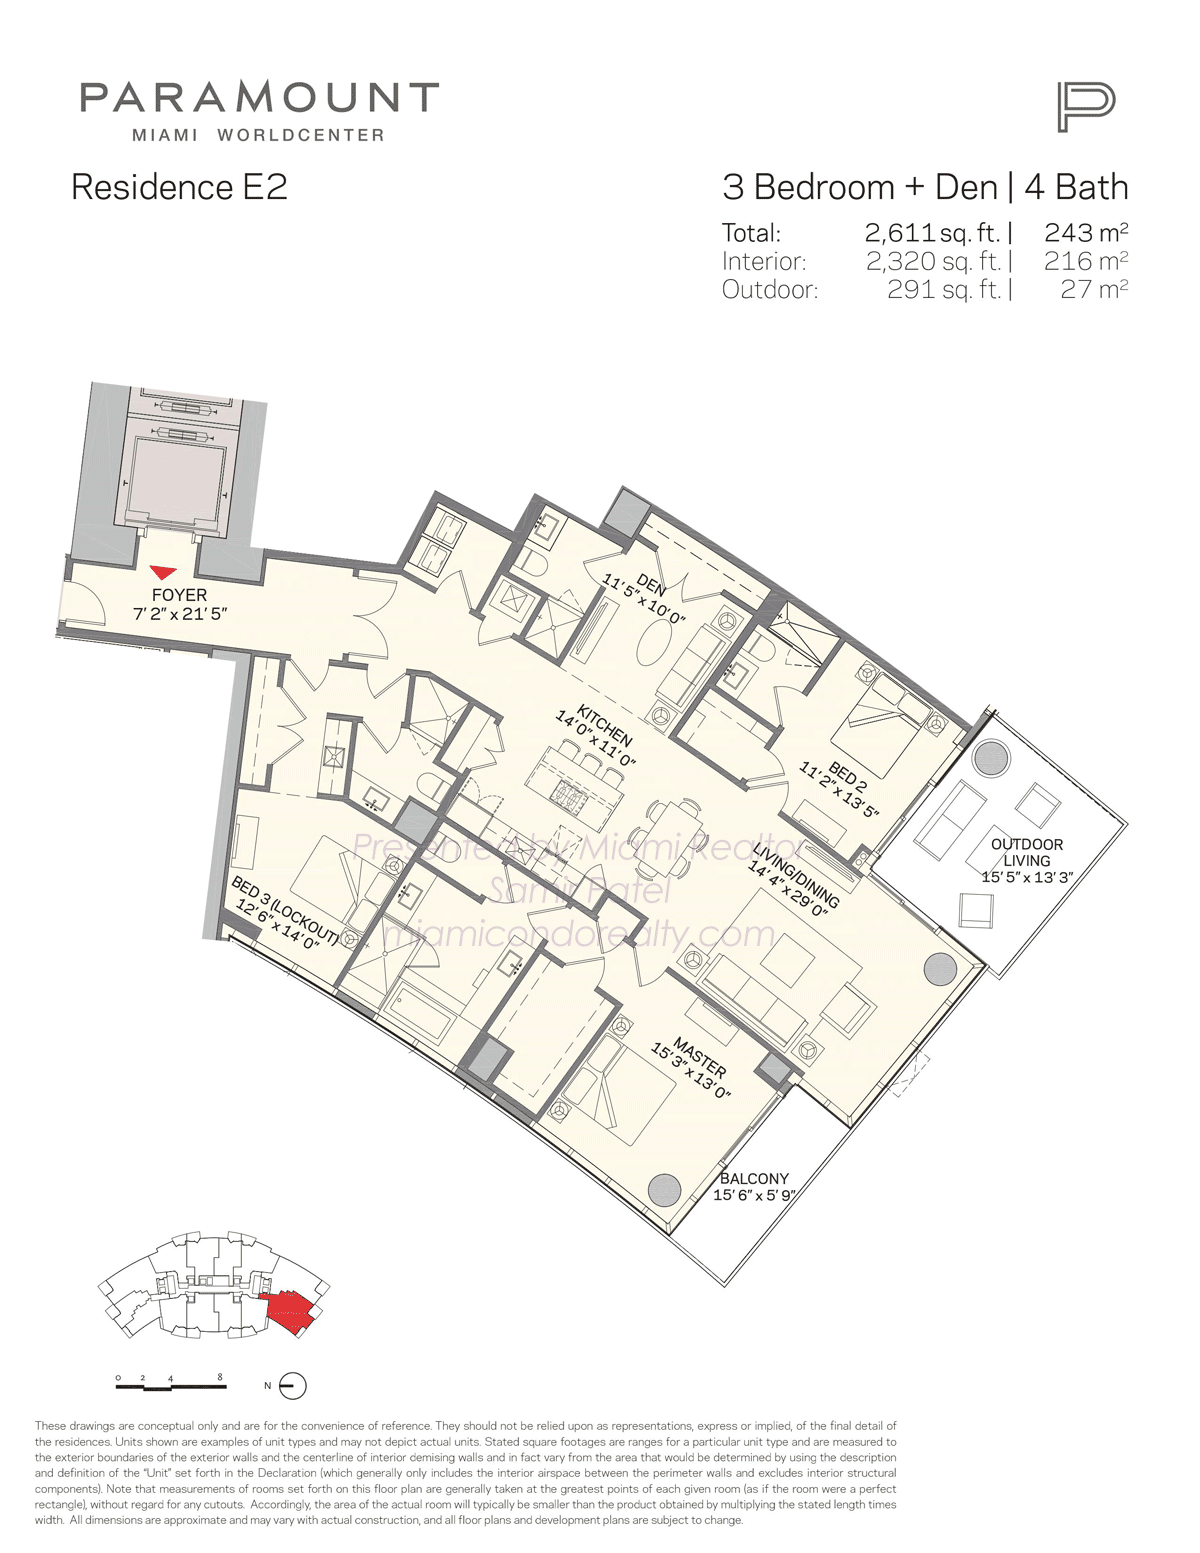 Paramount Miami Worldcenter Residence Model E2 Floorplan